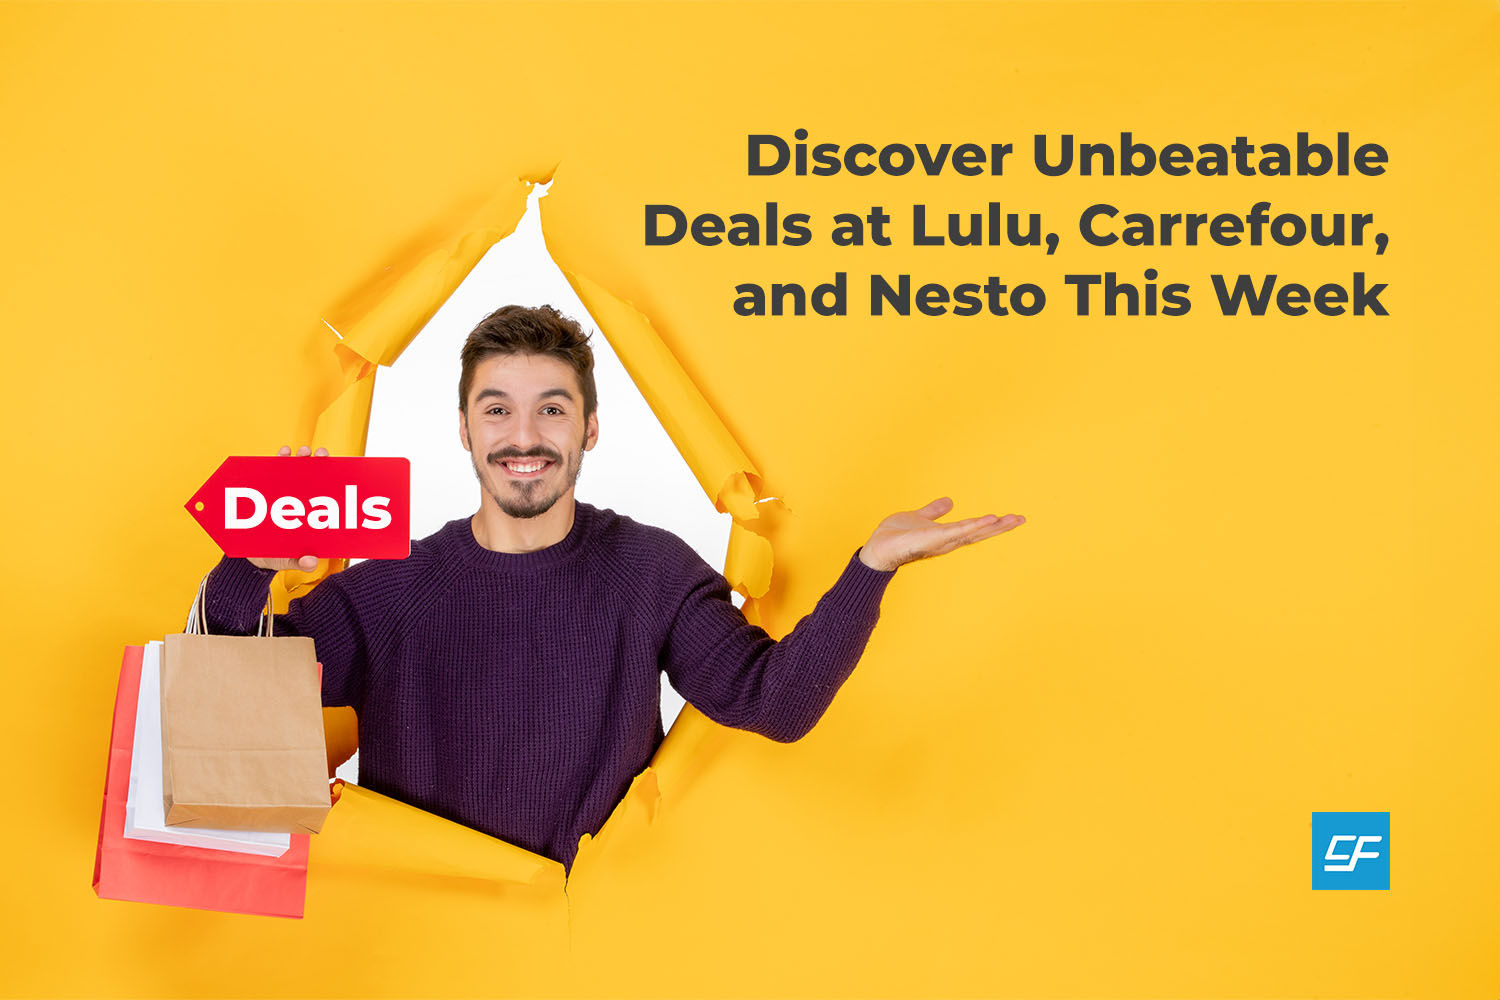 Discover unbeatable deals